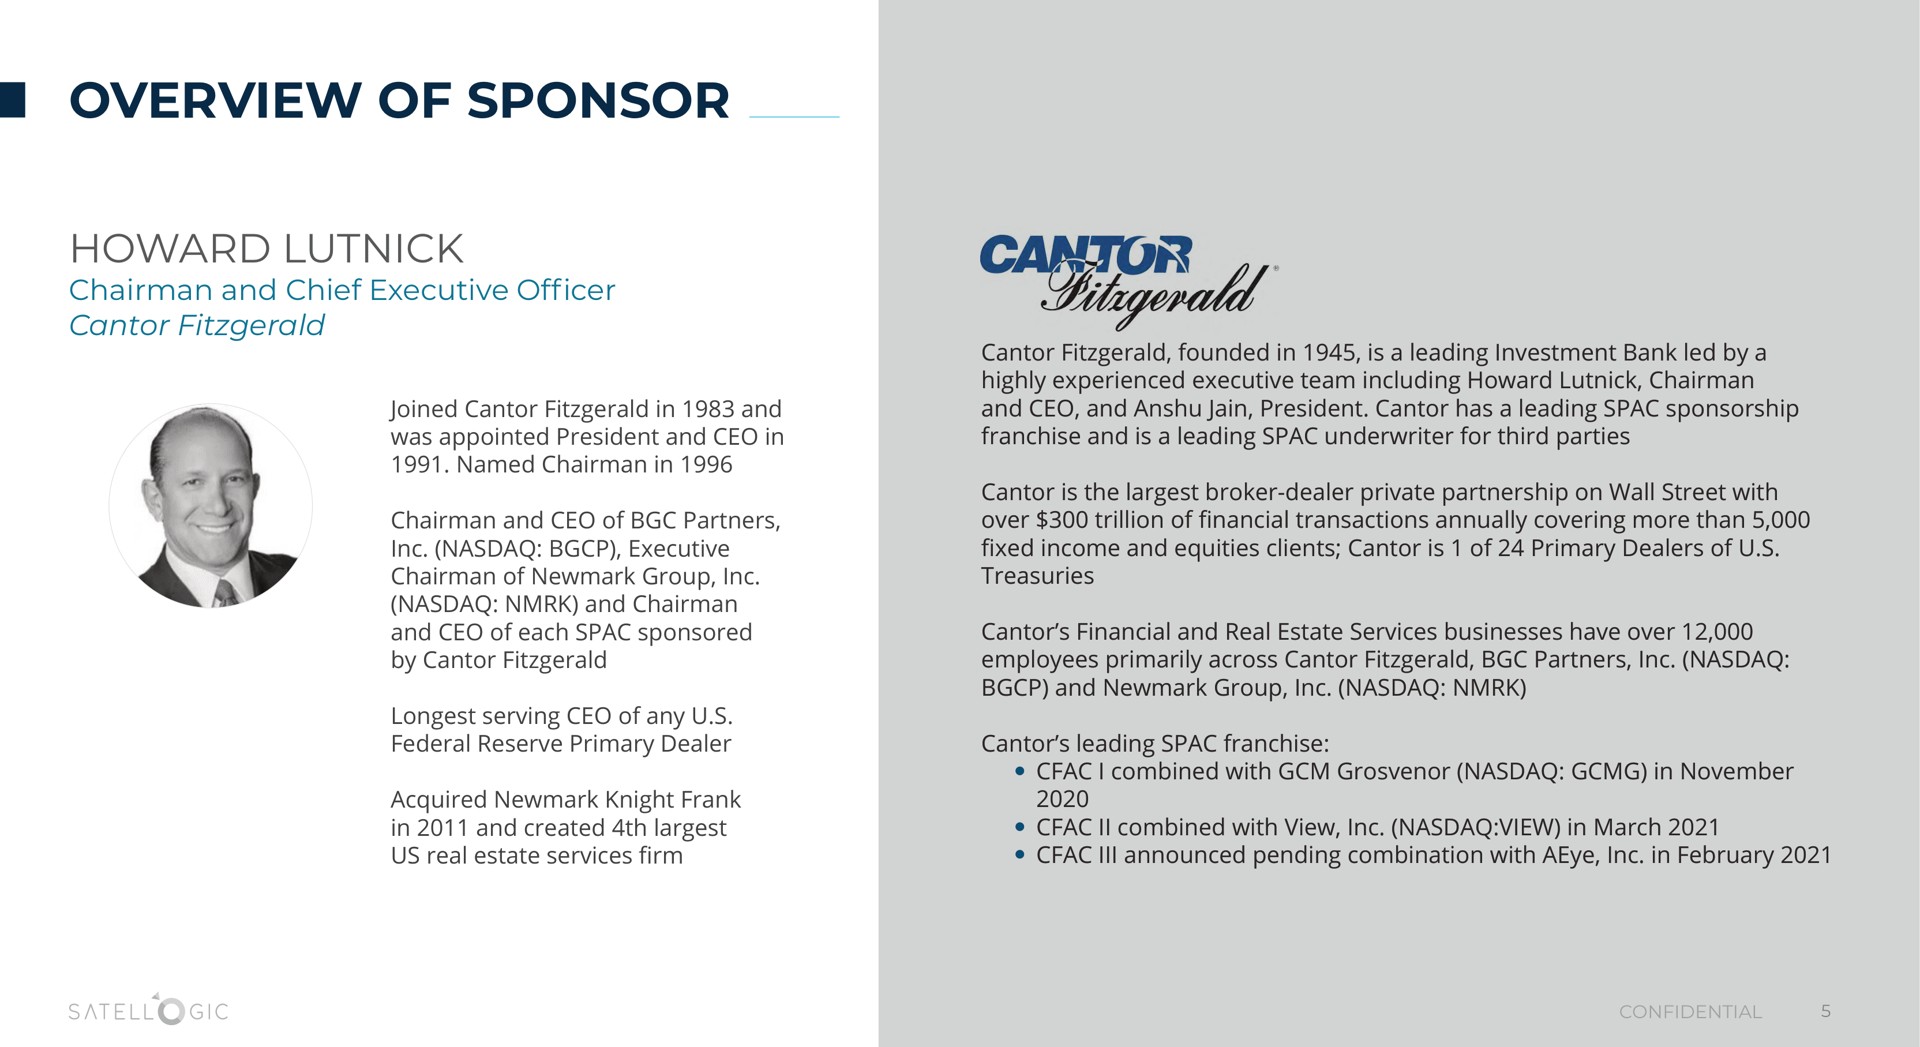 overview of sponsor cantor | Satellogic